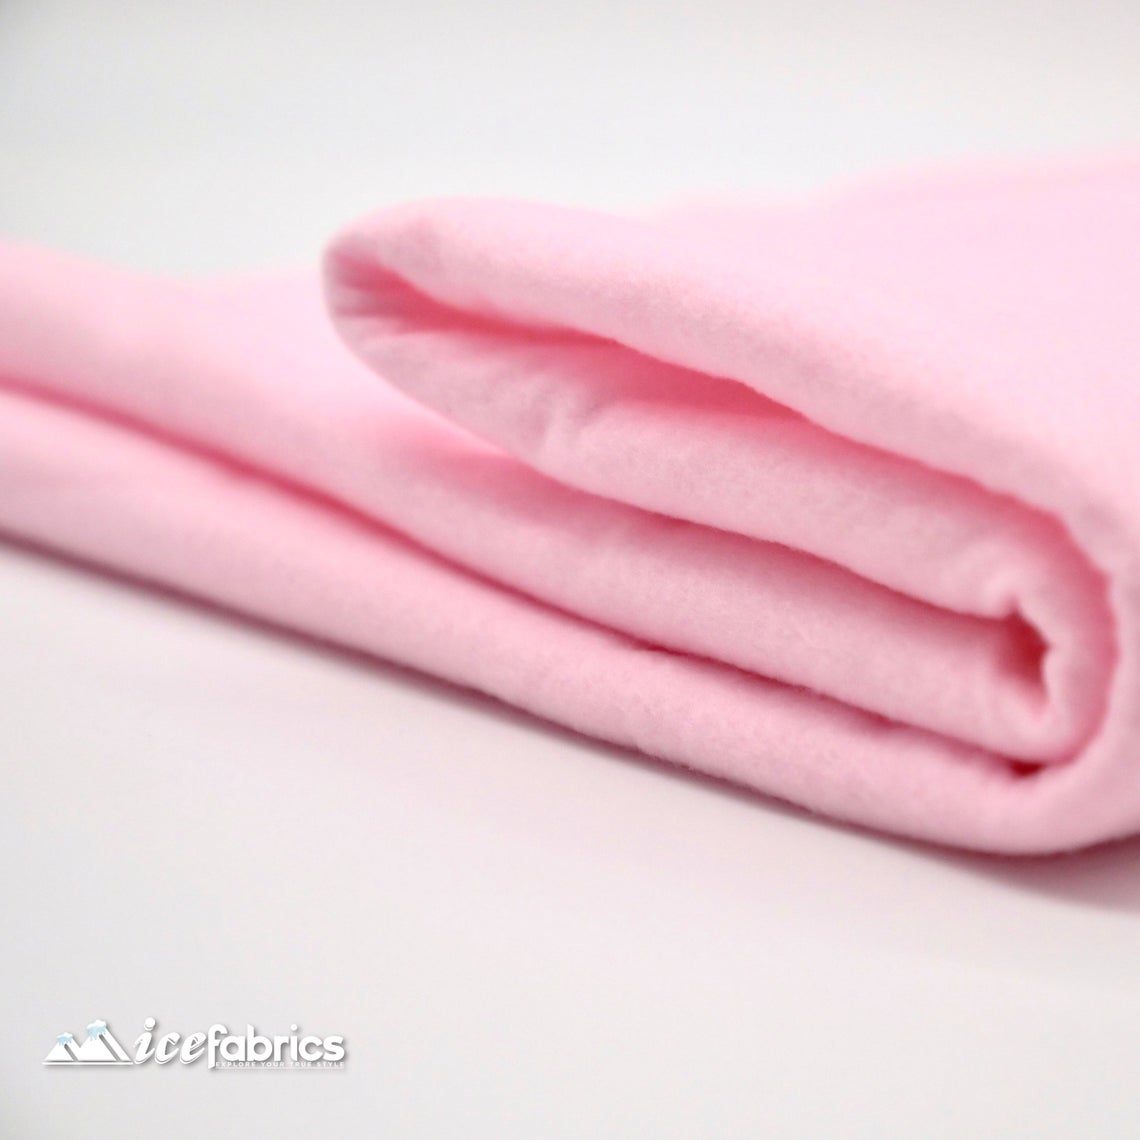 Acrylic Felt Fabric By The Roll | 20 yards | Wholesale Fabric ICE FABRICS Pink